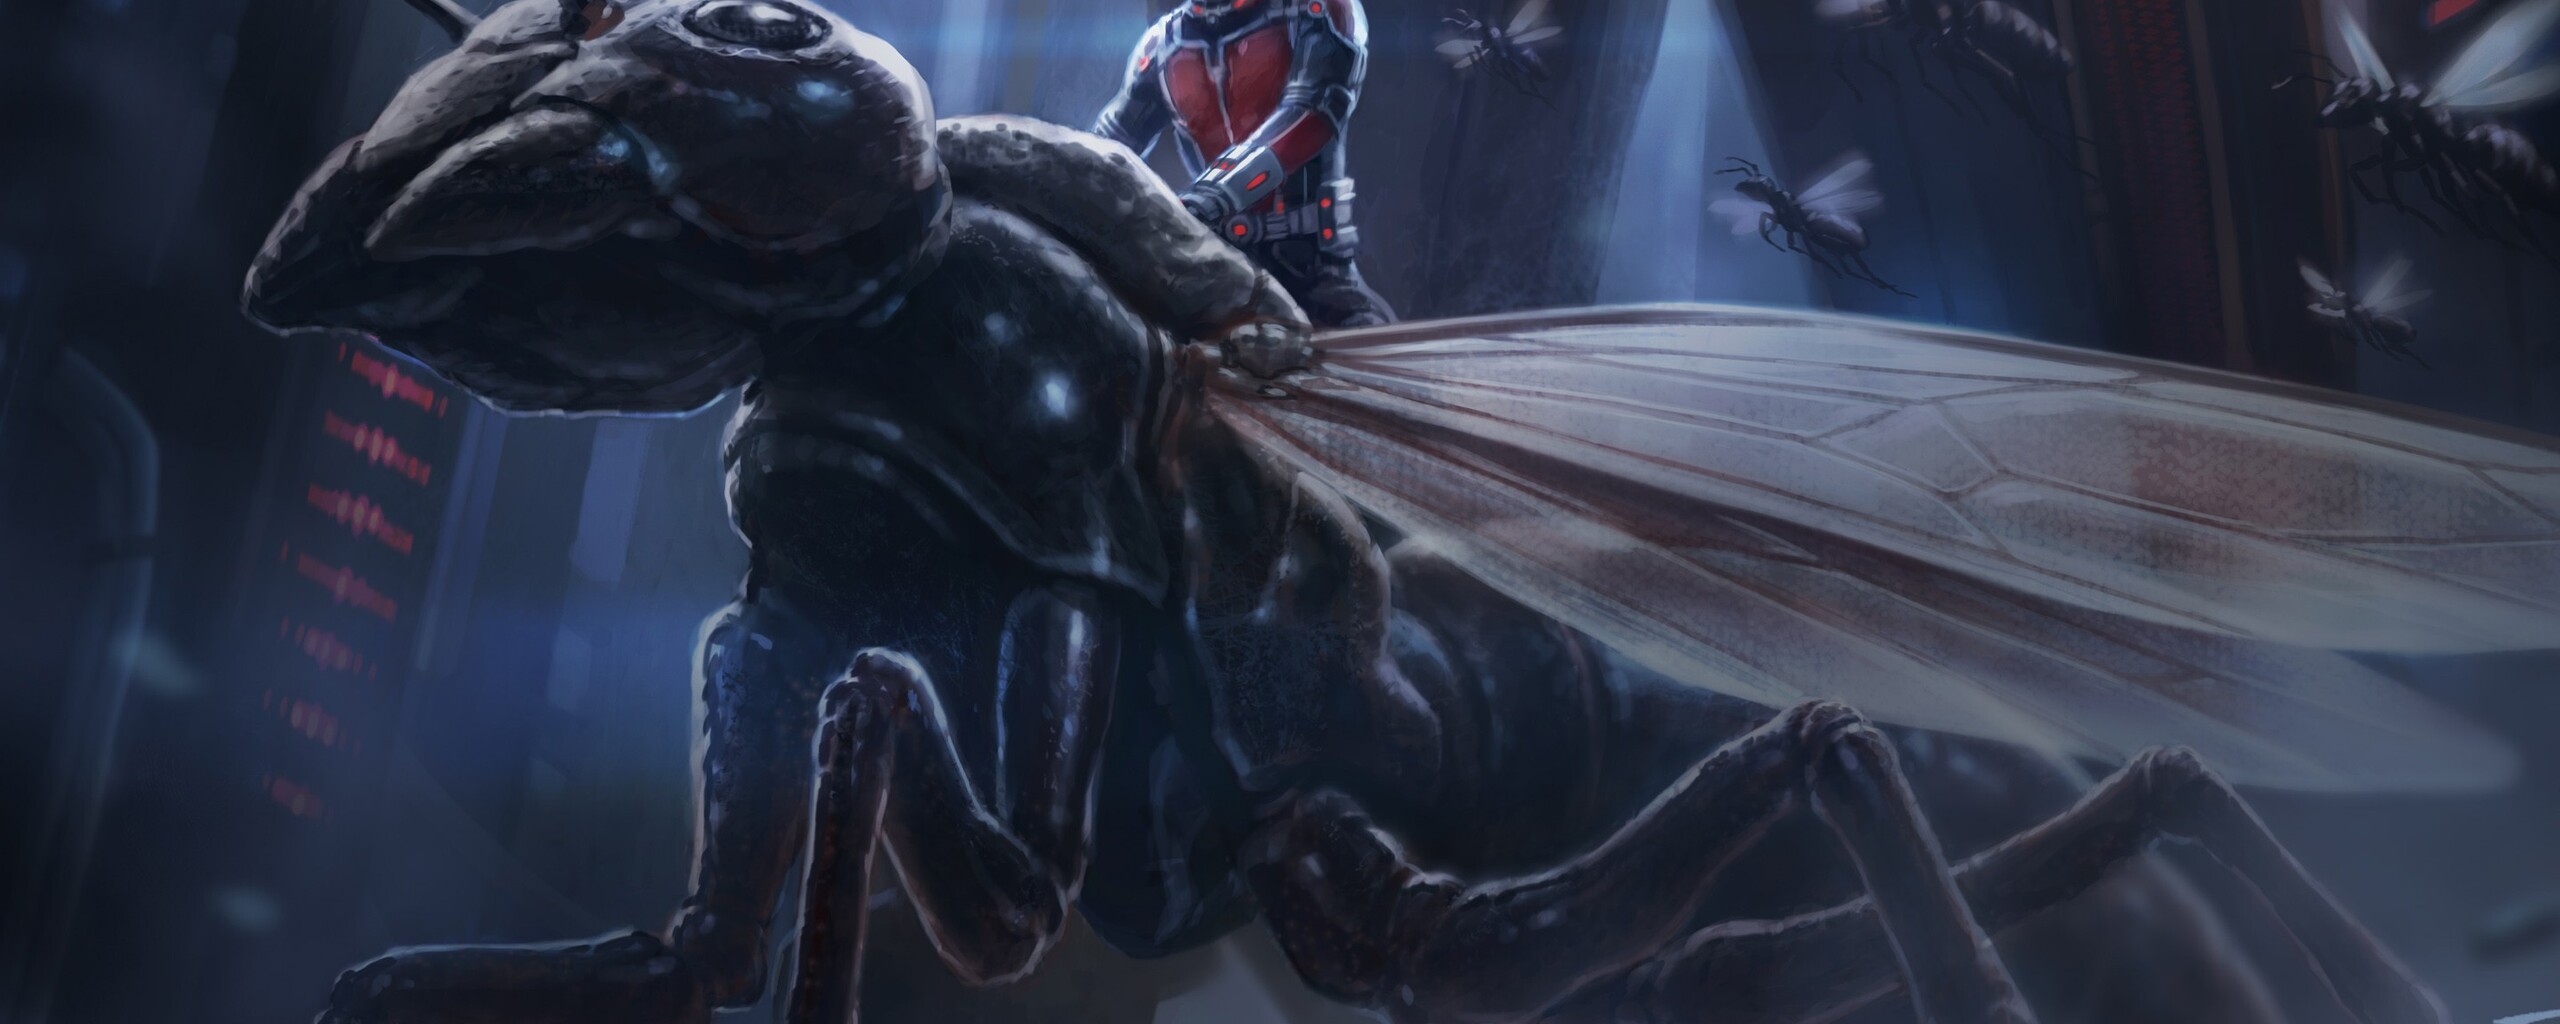 ant-man-artwork.jpg